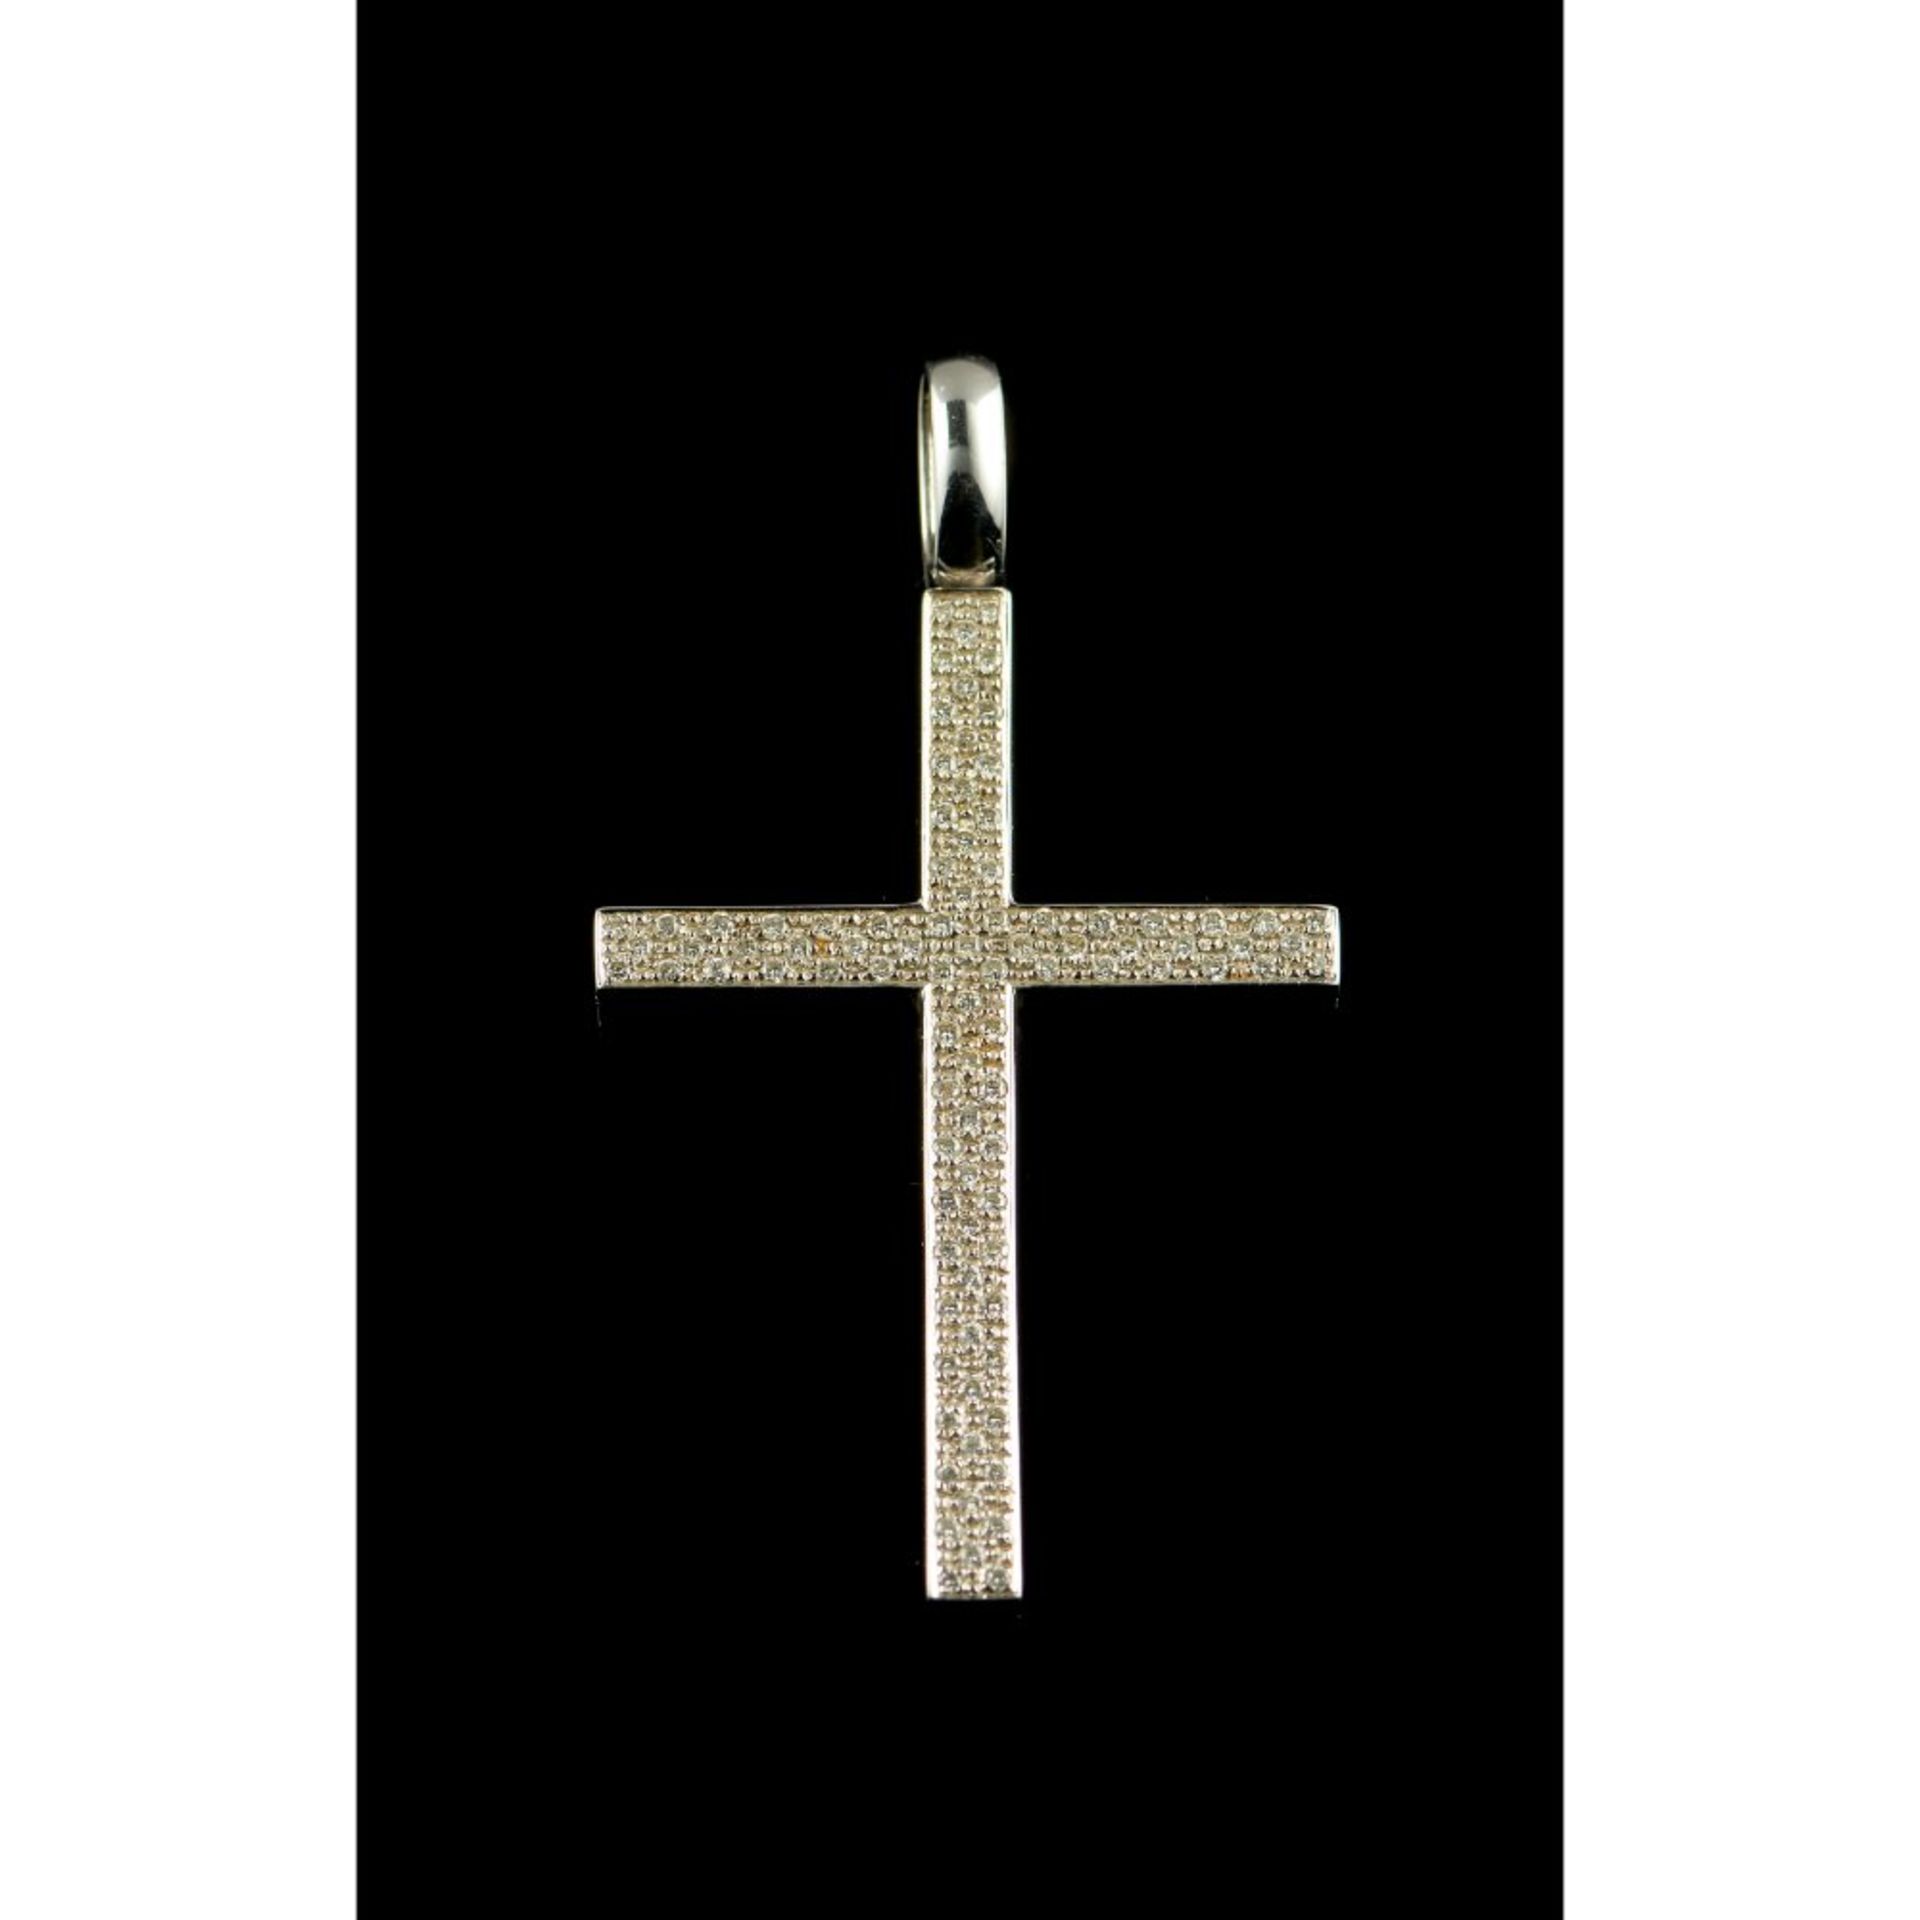 A "Cross" pendant